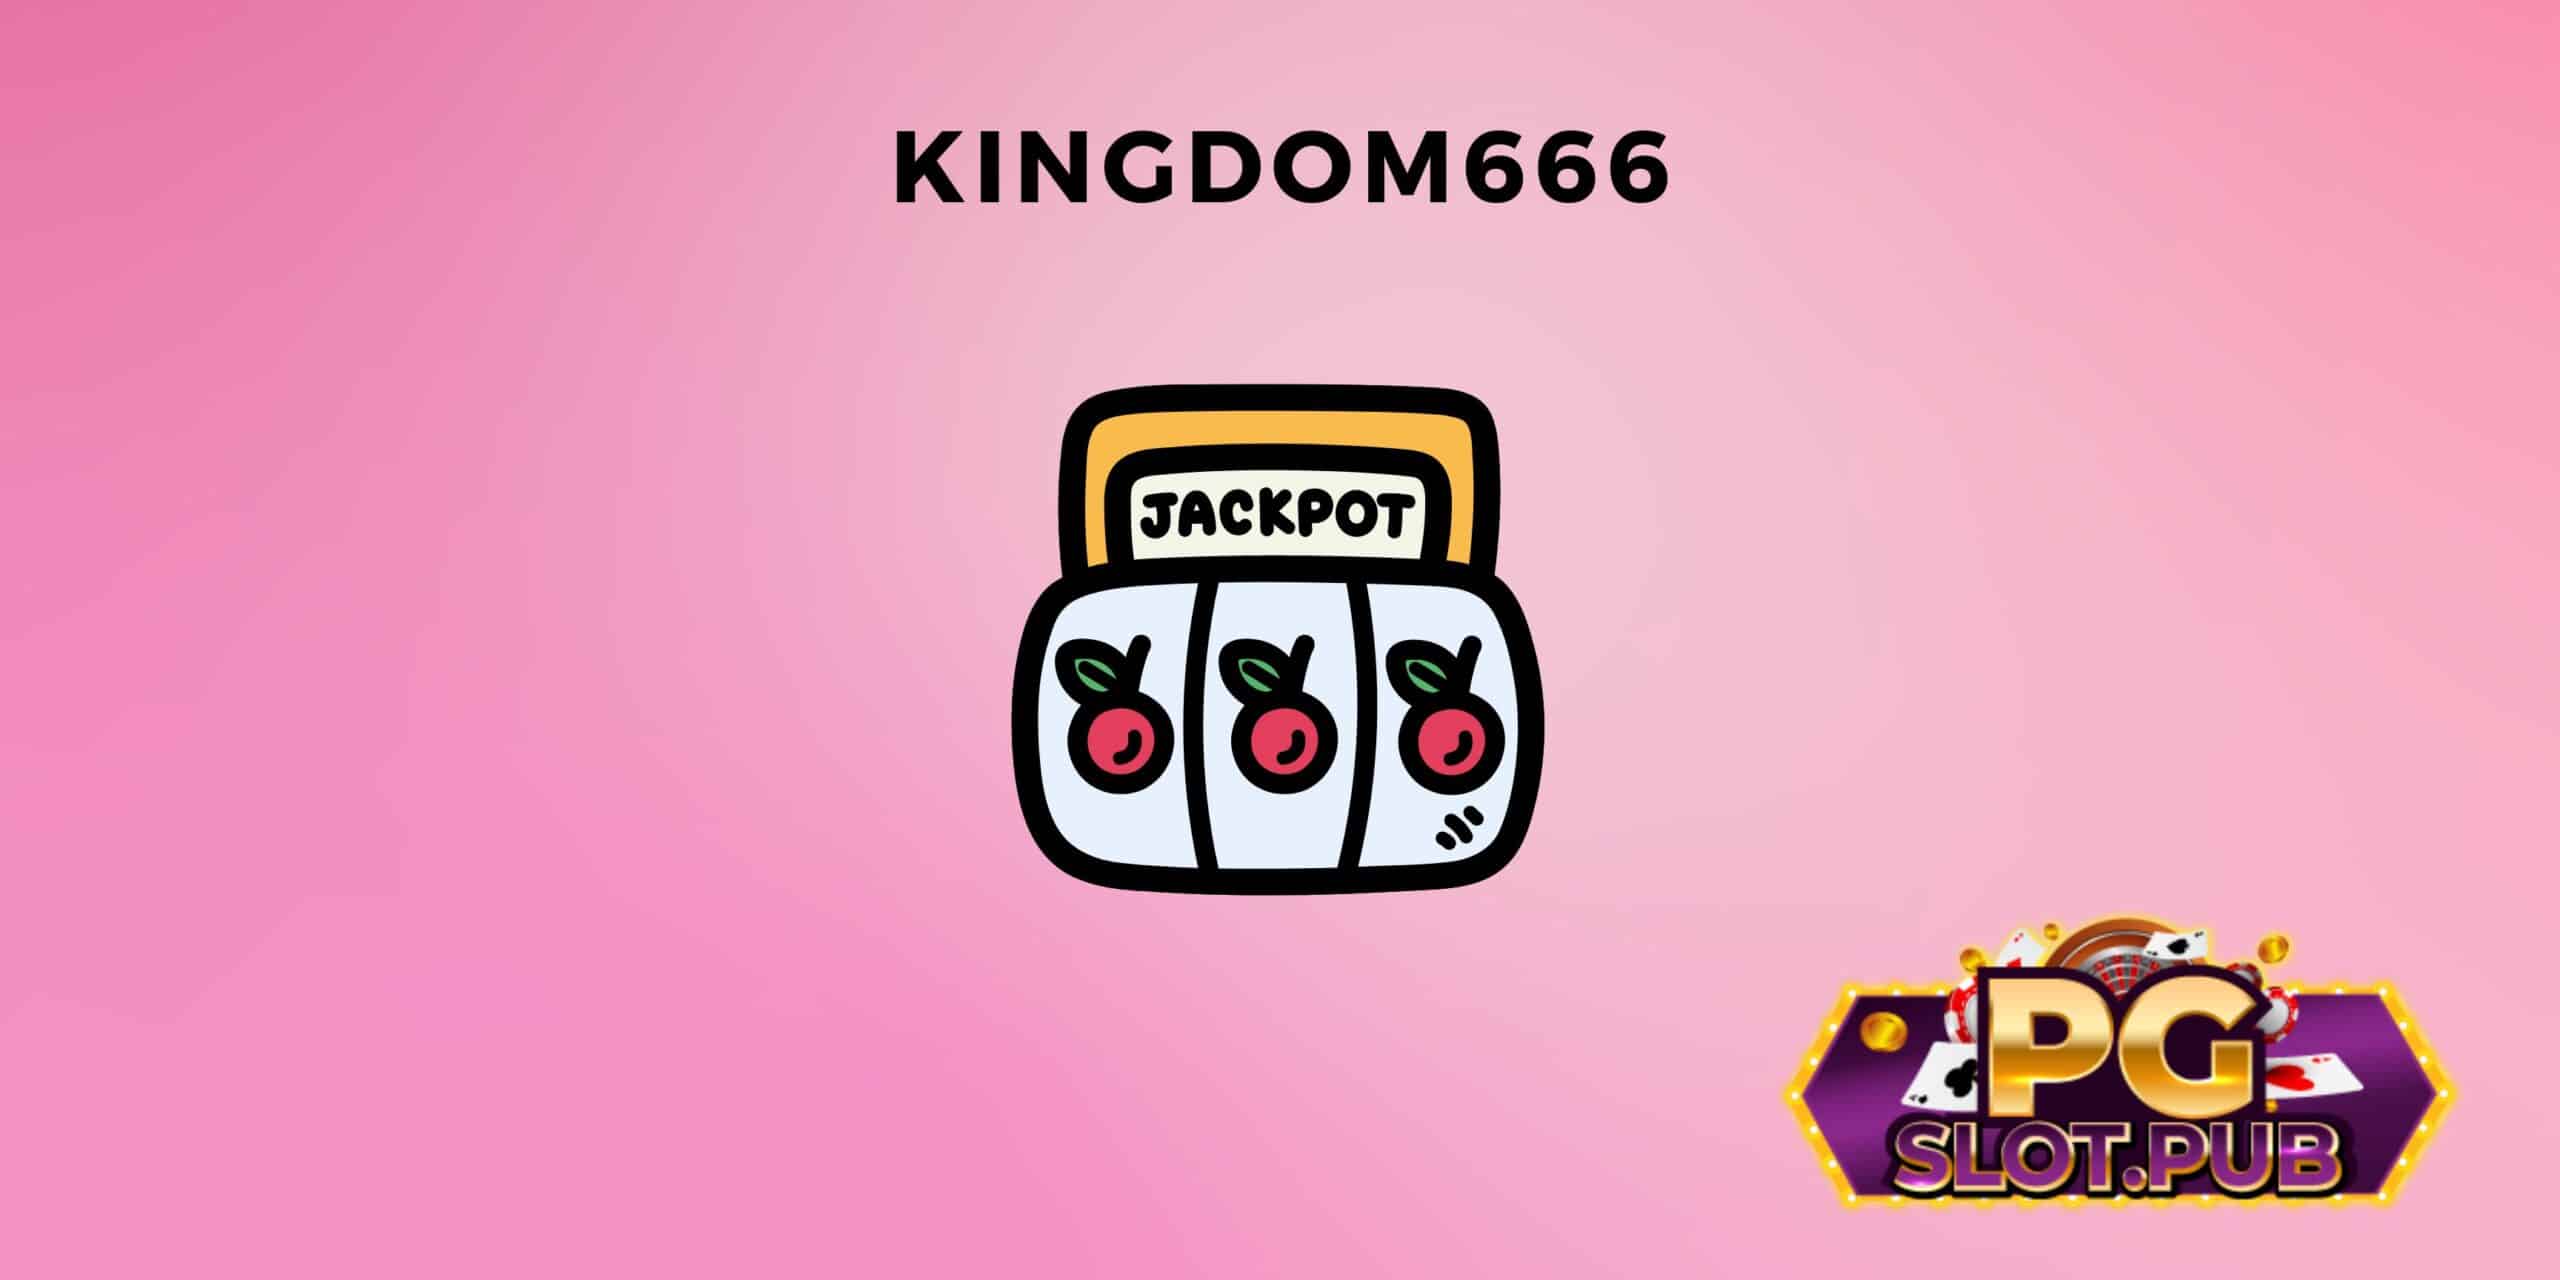 kingdom666